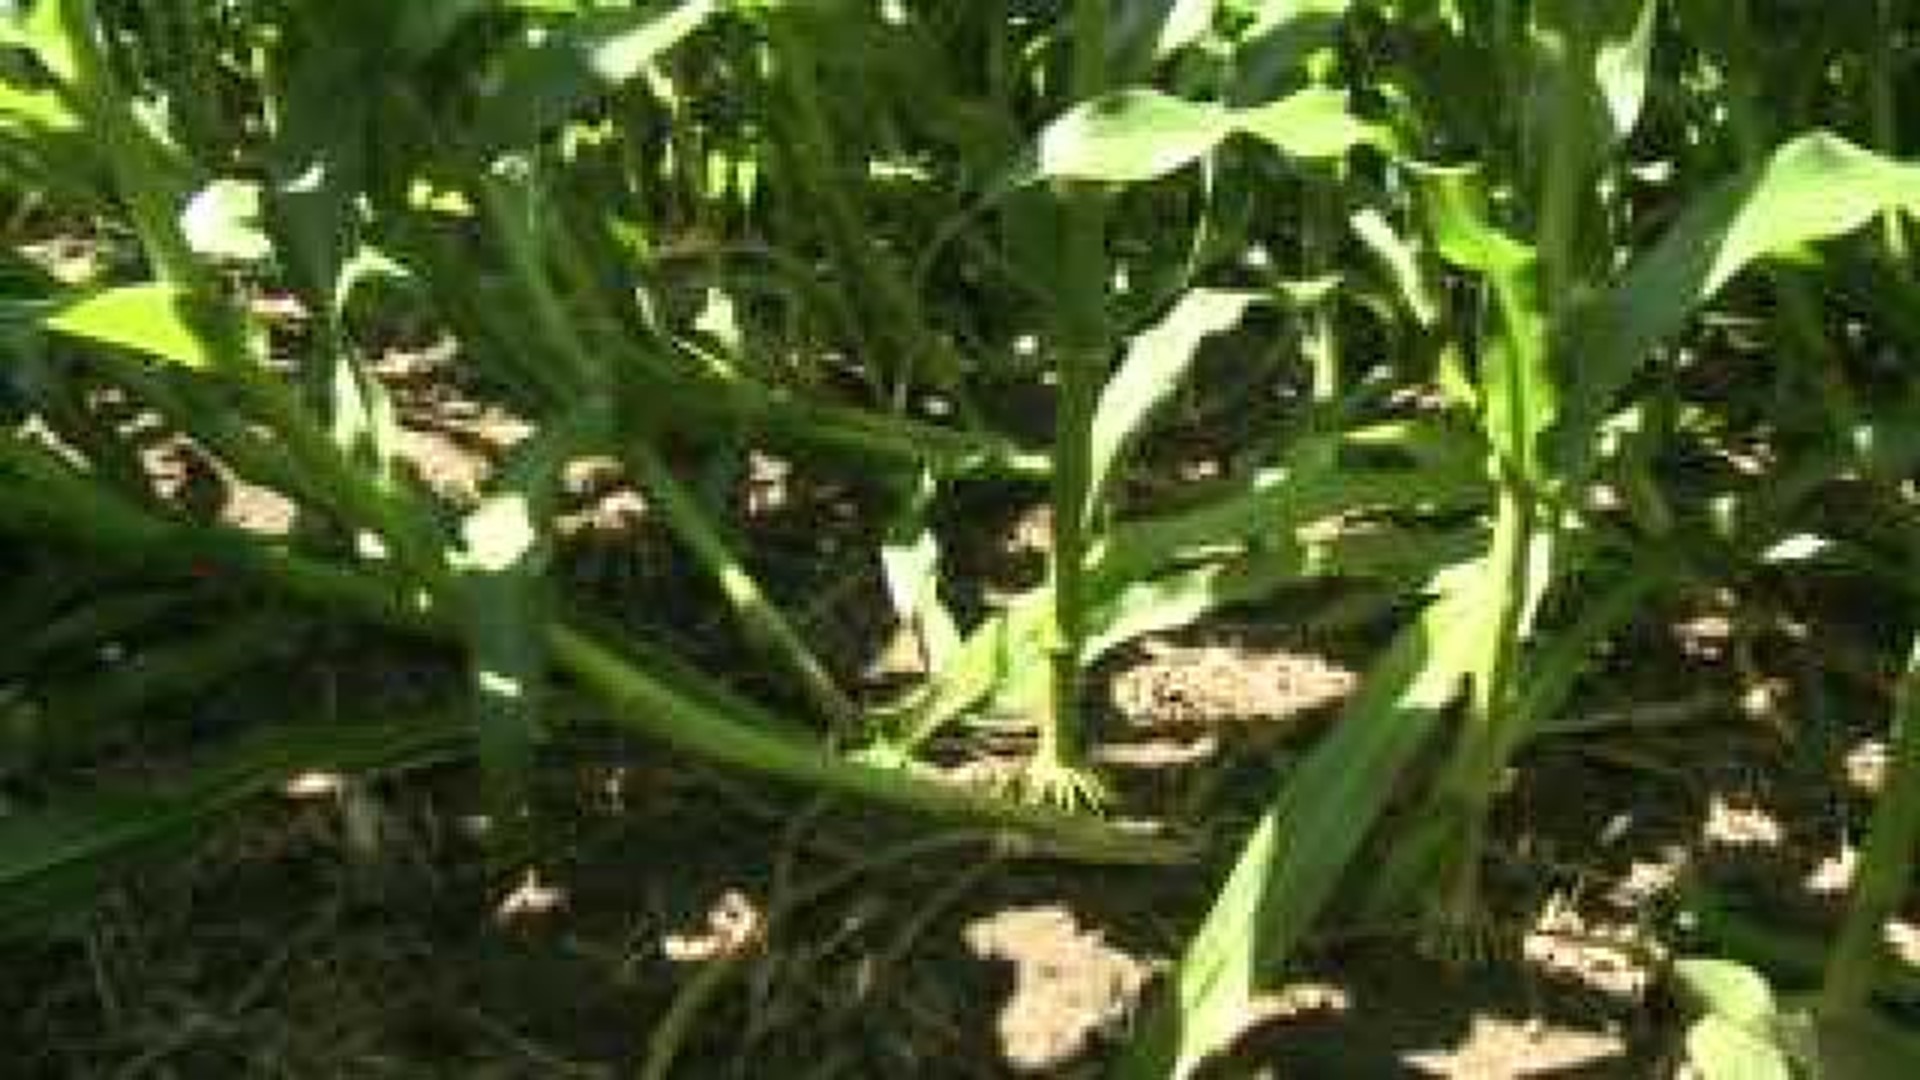 Storm damage lingers with corn crop